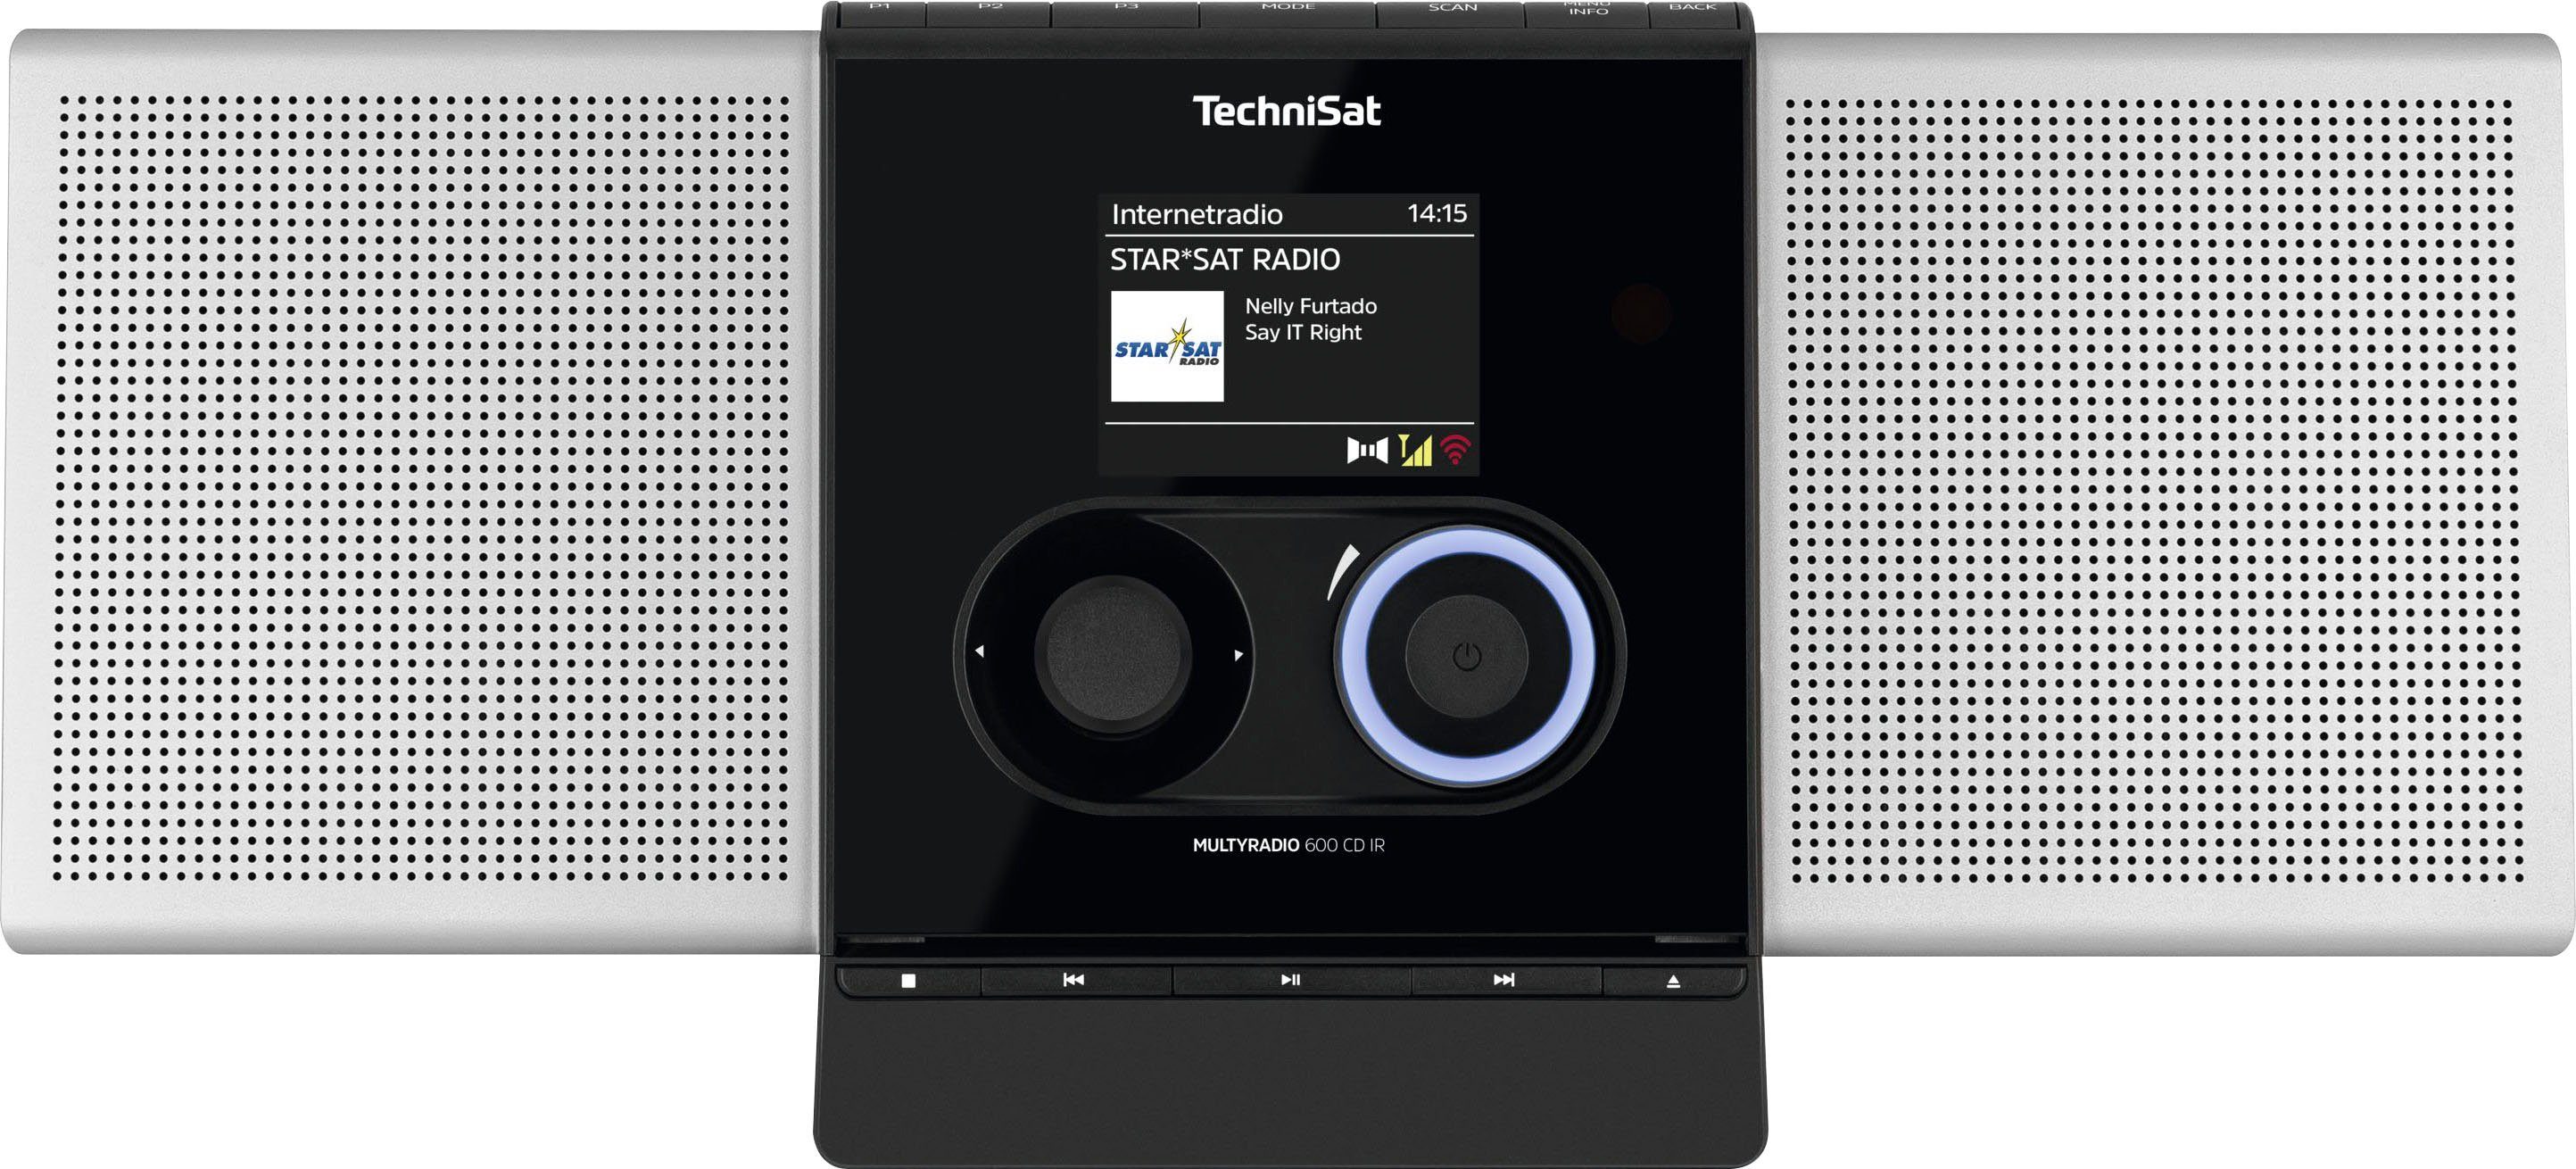 TechniSat MULTYRADIO 600 CD IR Internetradio DAB+, VHF (FM) Bluetooth, Internetradio, LAN, USB, WiFi